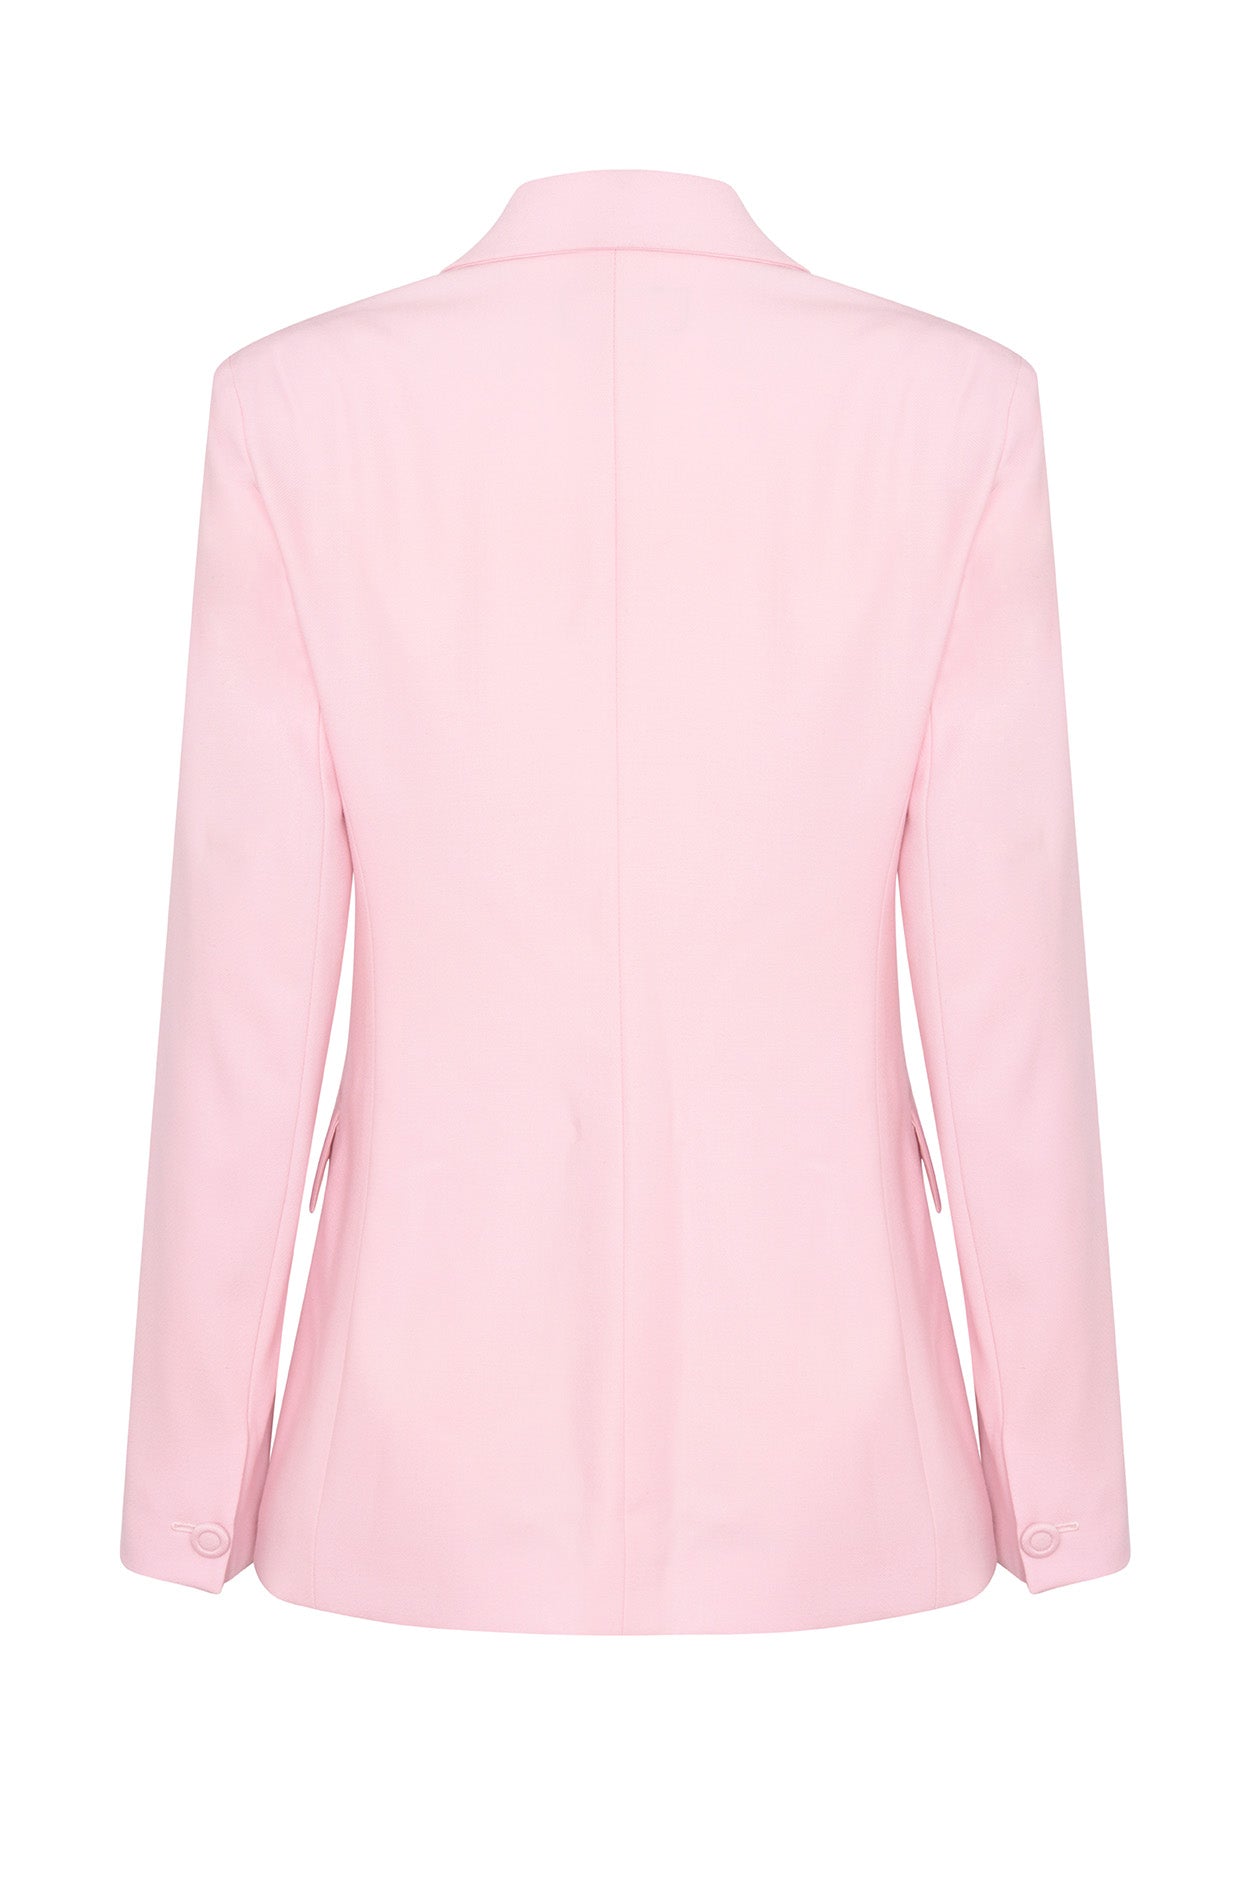 Pale Pink Wool Faille Double Breasted Blazer Jacket - Imogen